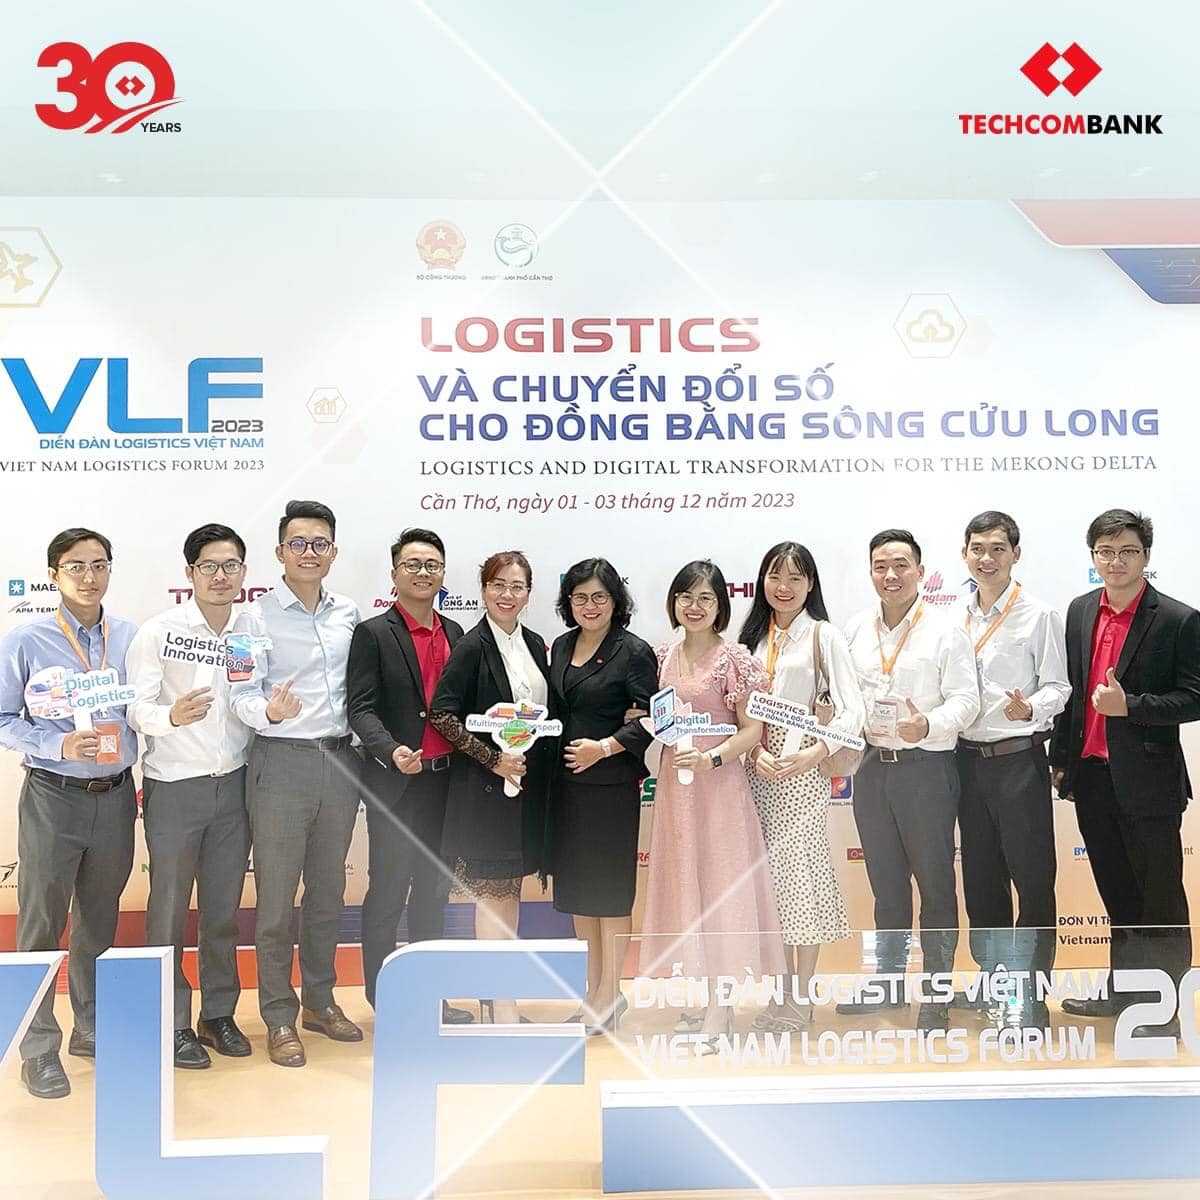 techcombank mang giai phap toan dien cho doanh nghiep logistics hinh 2